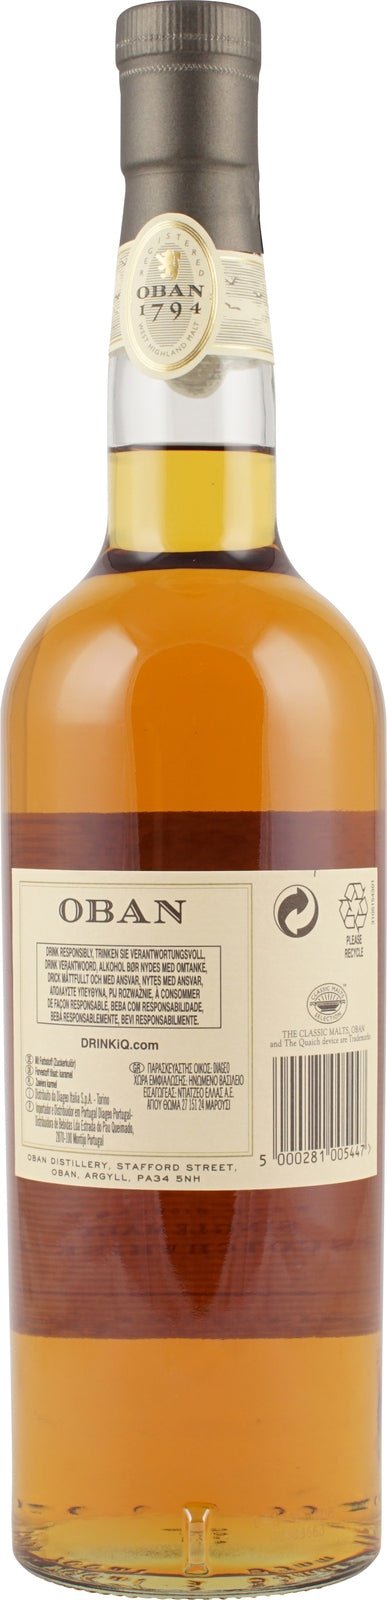 Oban Malt Whisky 14 Jahre 43% 0,7 ltr. - AllSpirits